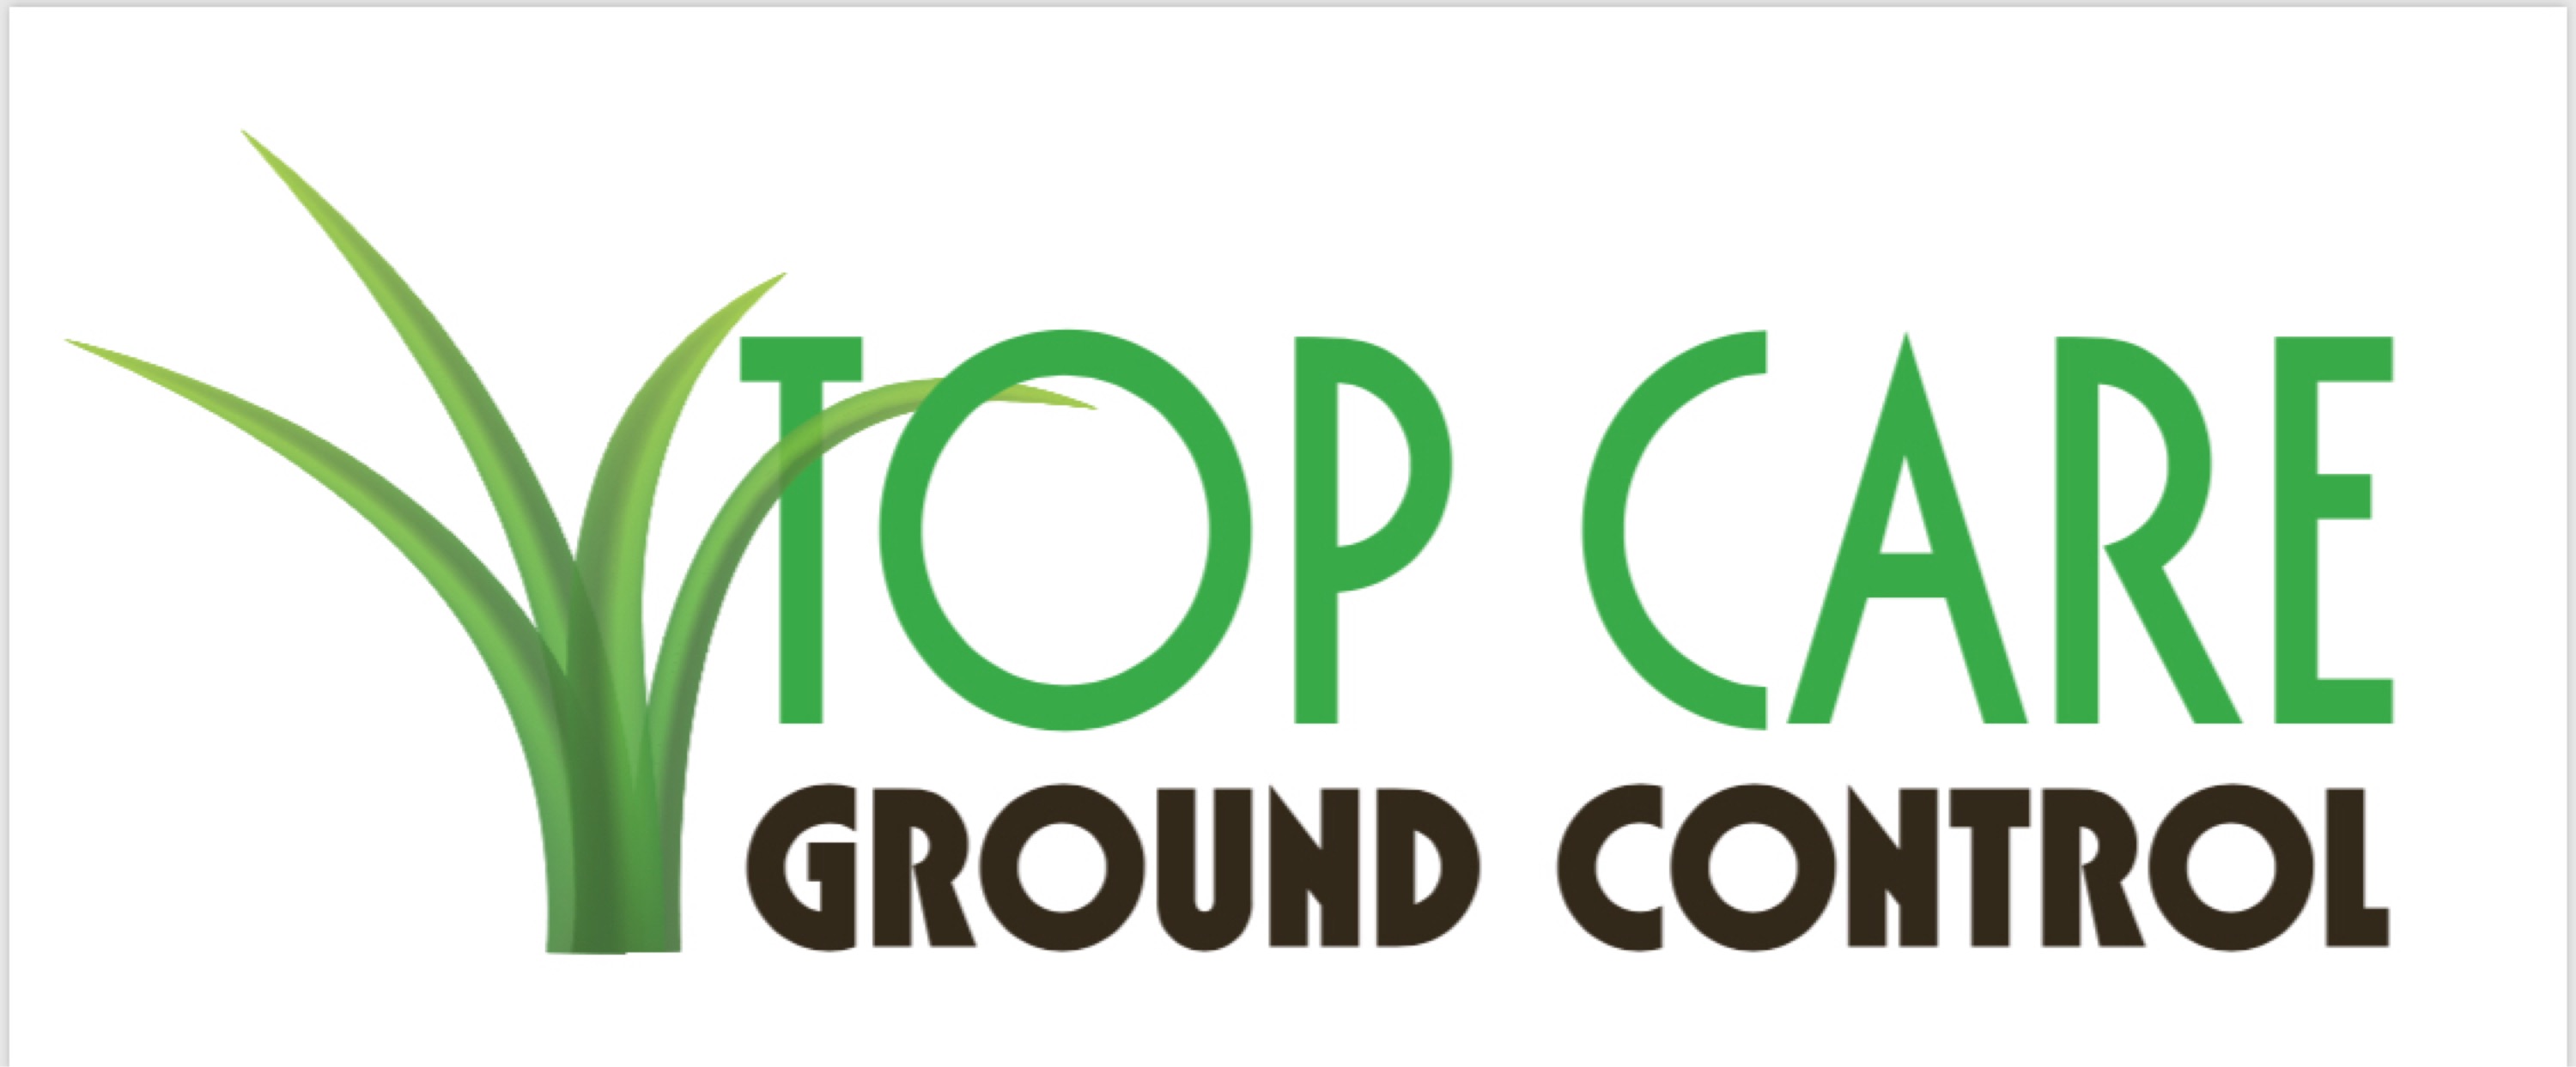 Top Care Ground Control Logo